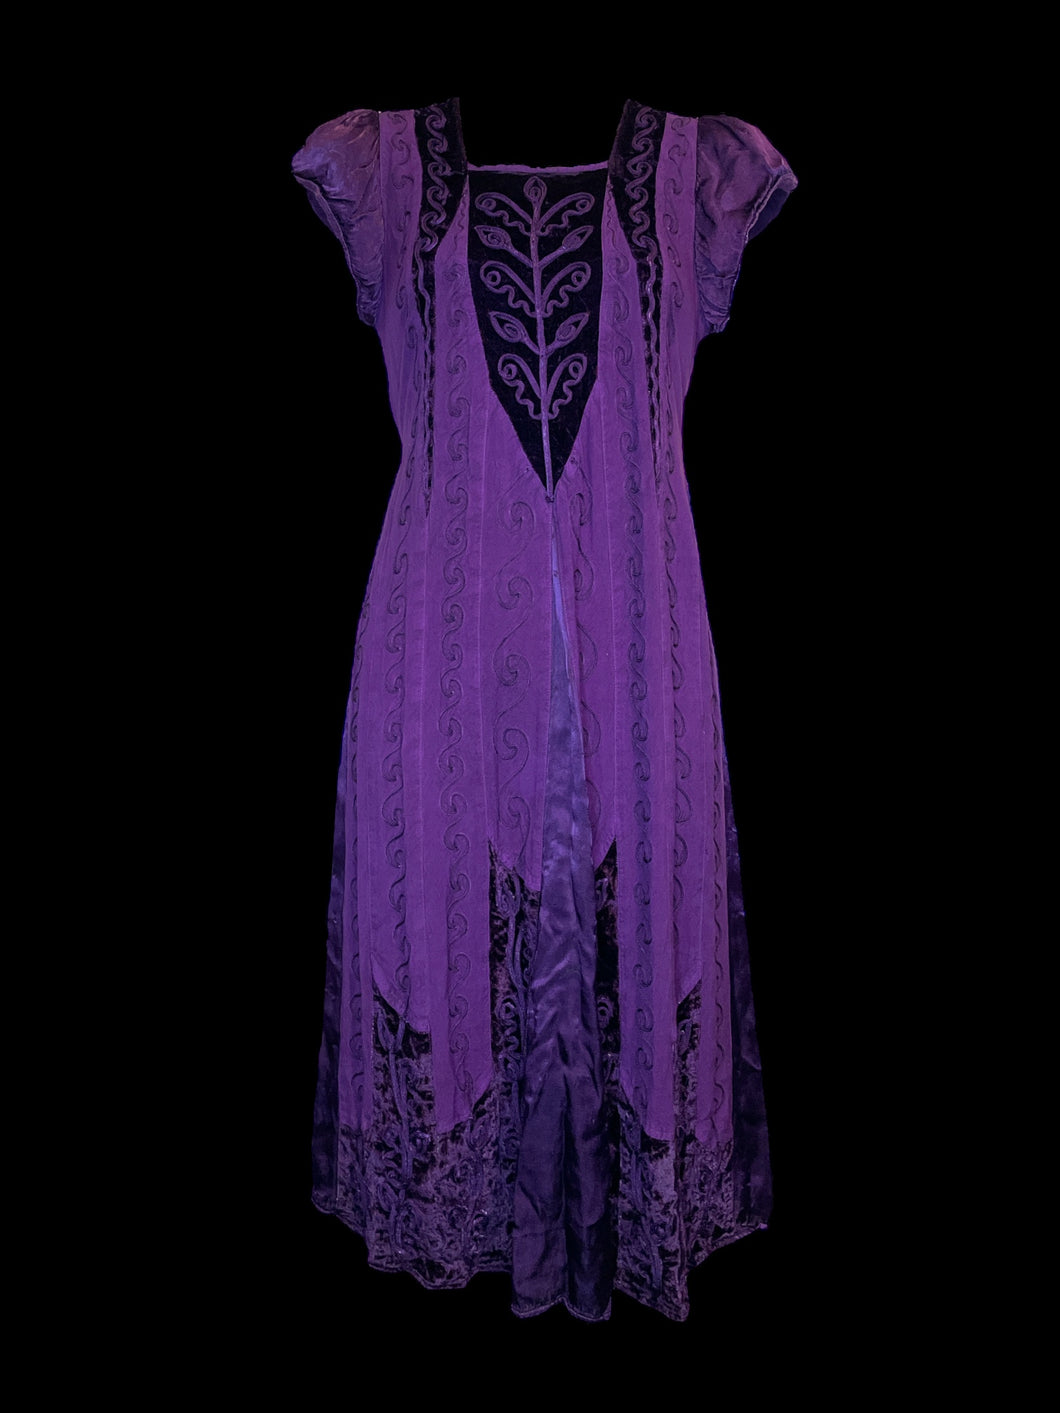 M Purple short sleeve Holy Clothing dress w/ multitexture pattern, ruffle sleeves, built-in fabric belt, & keyhole back